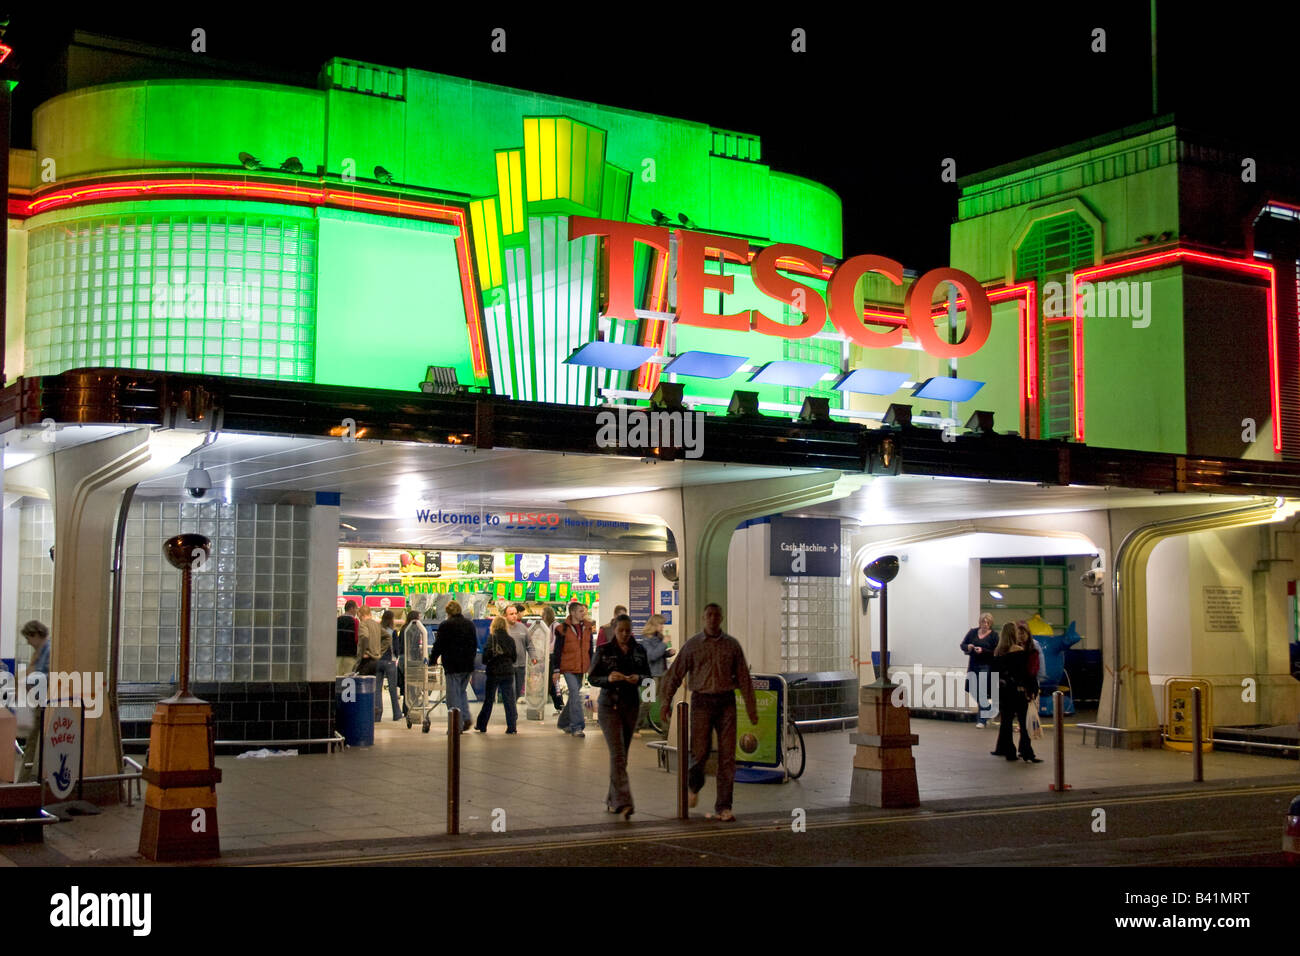 entrance-to-tesco-supermarket-in-former-